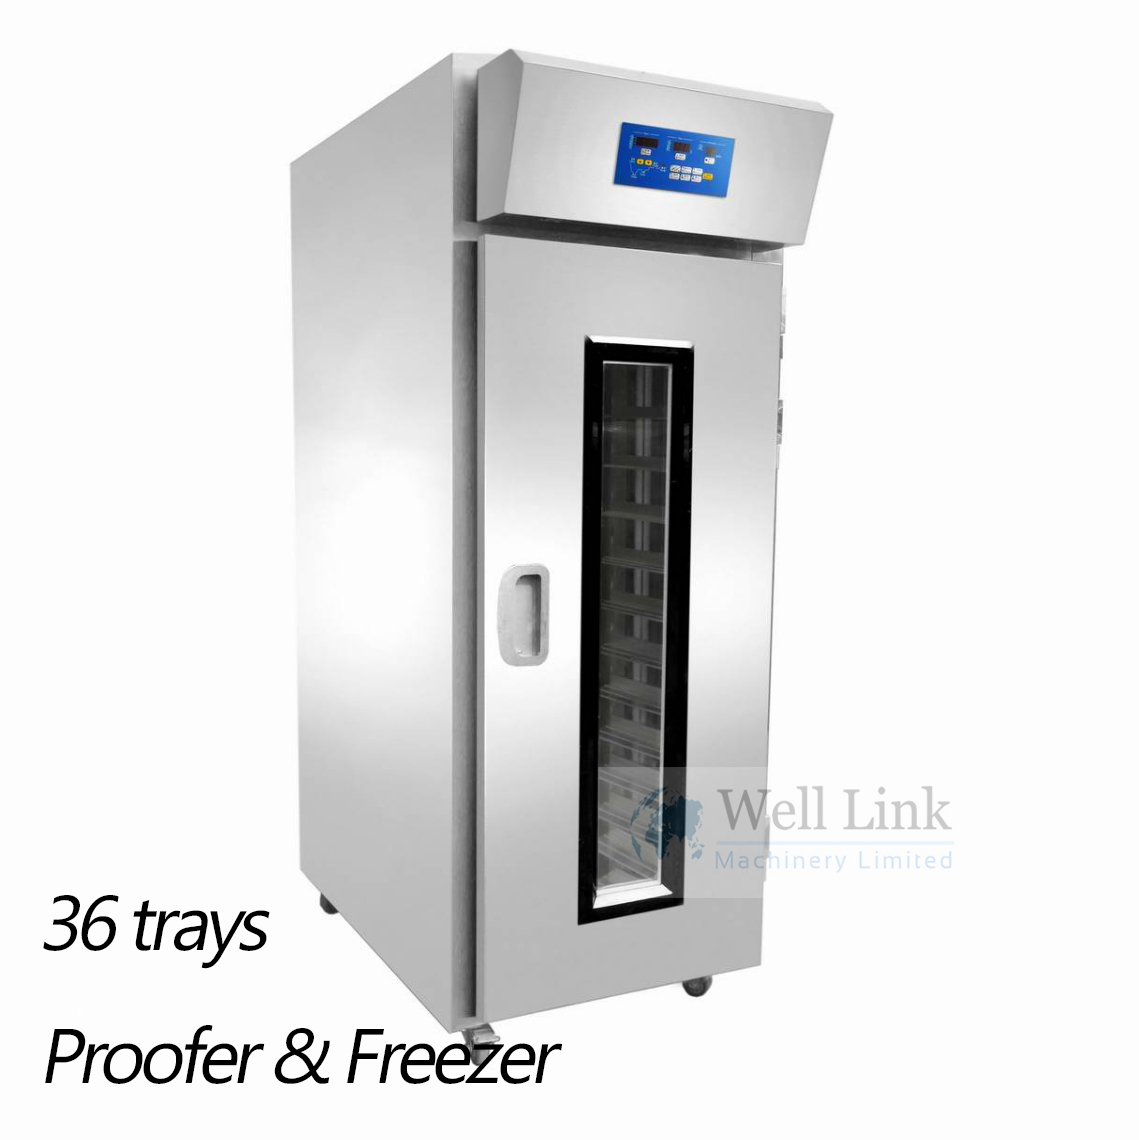 36 trays of Freezer proofer